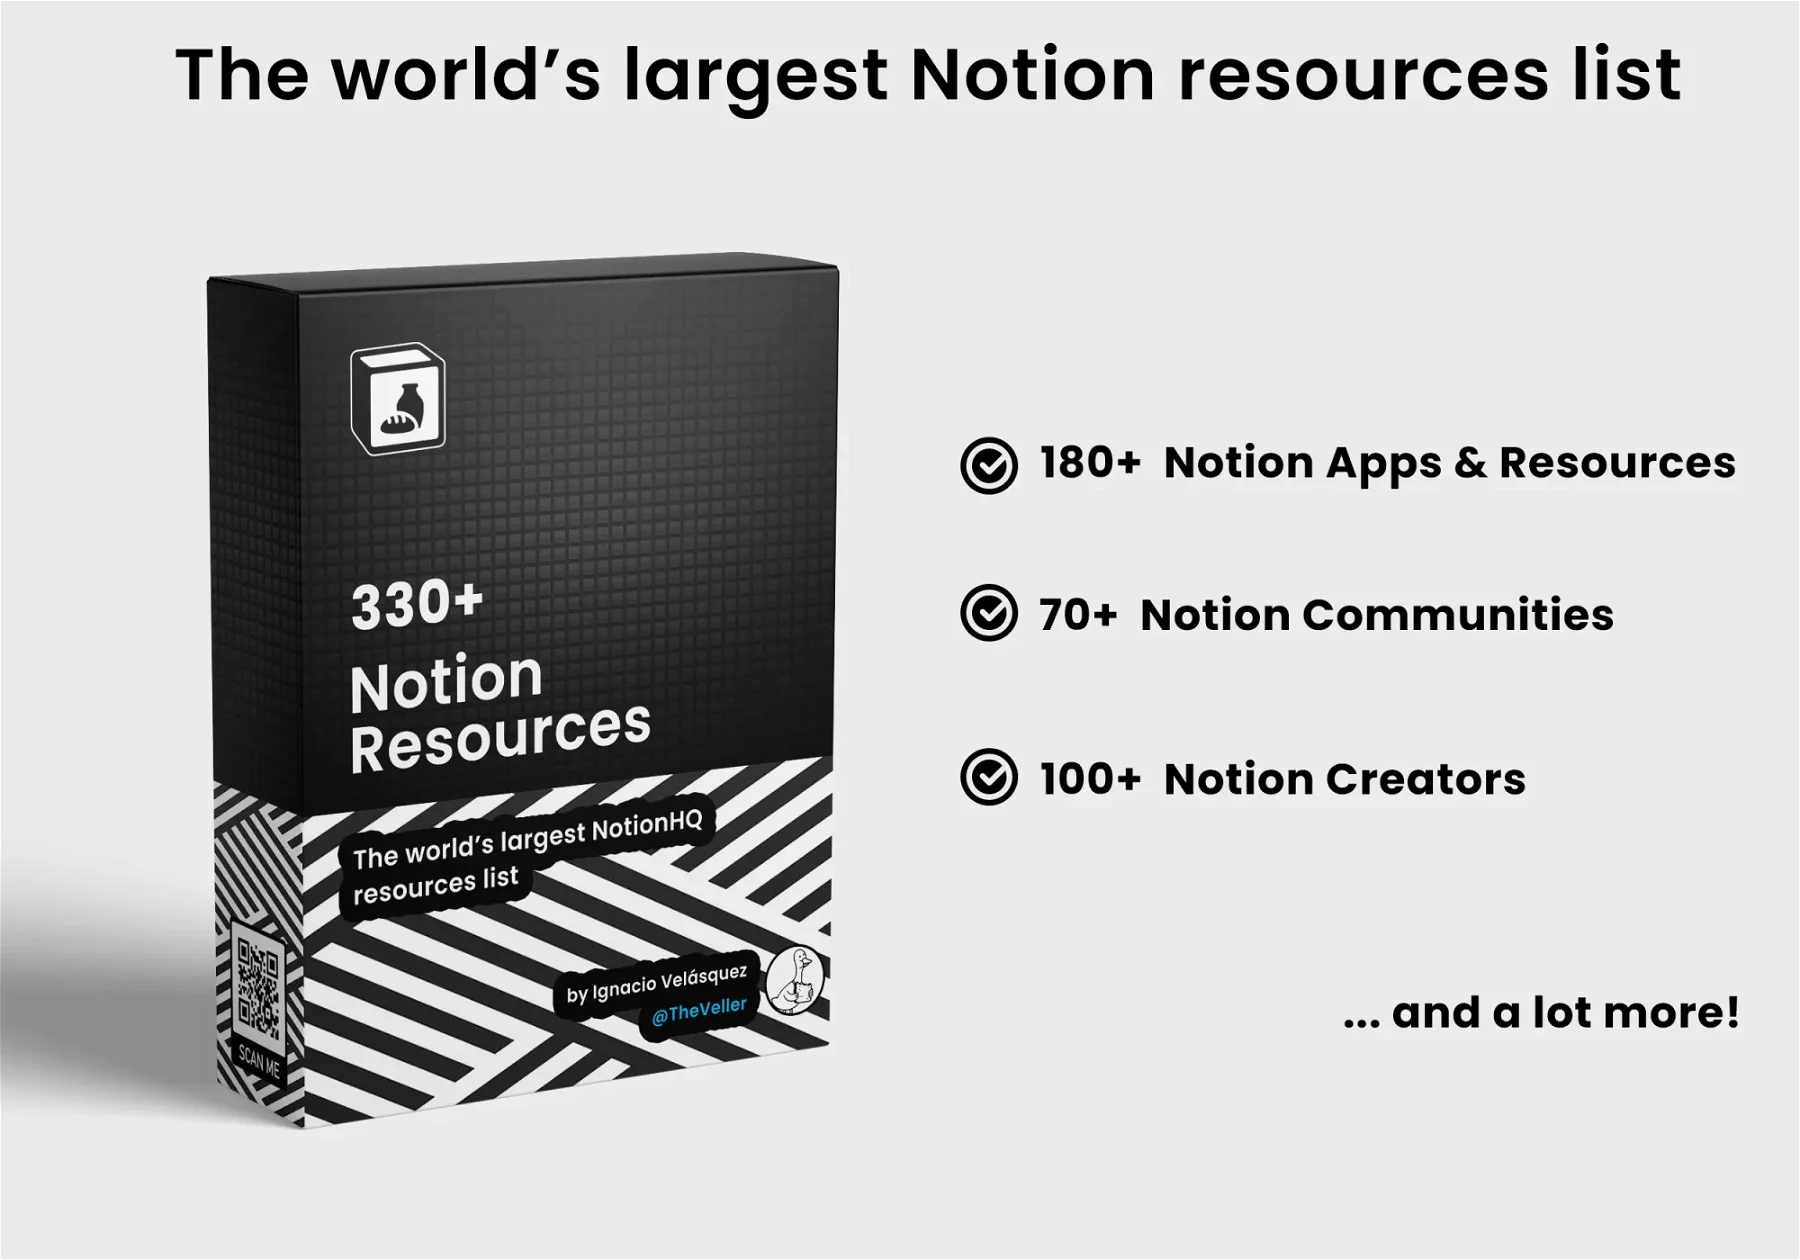 500+ Notion Resources